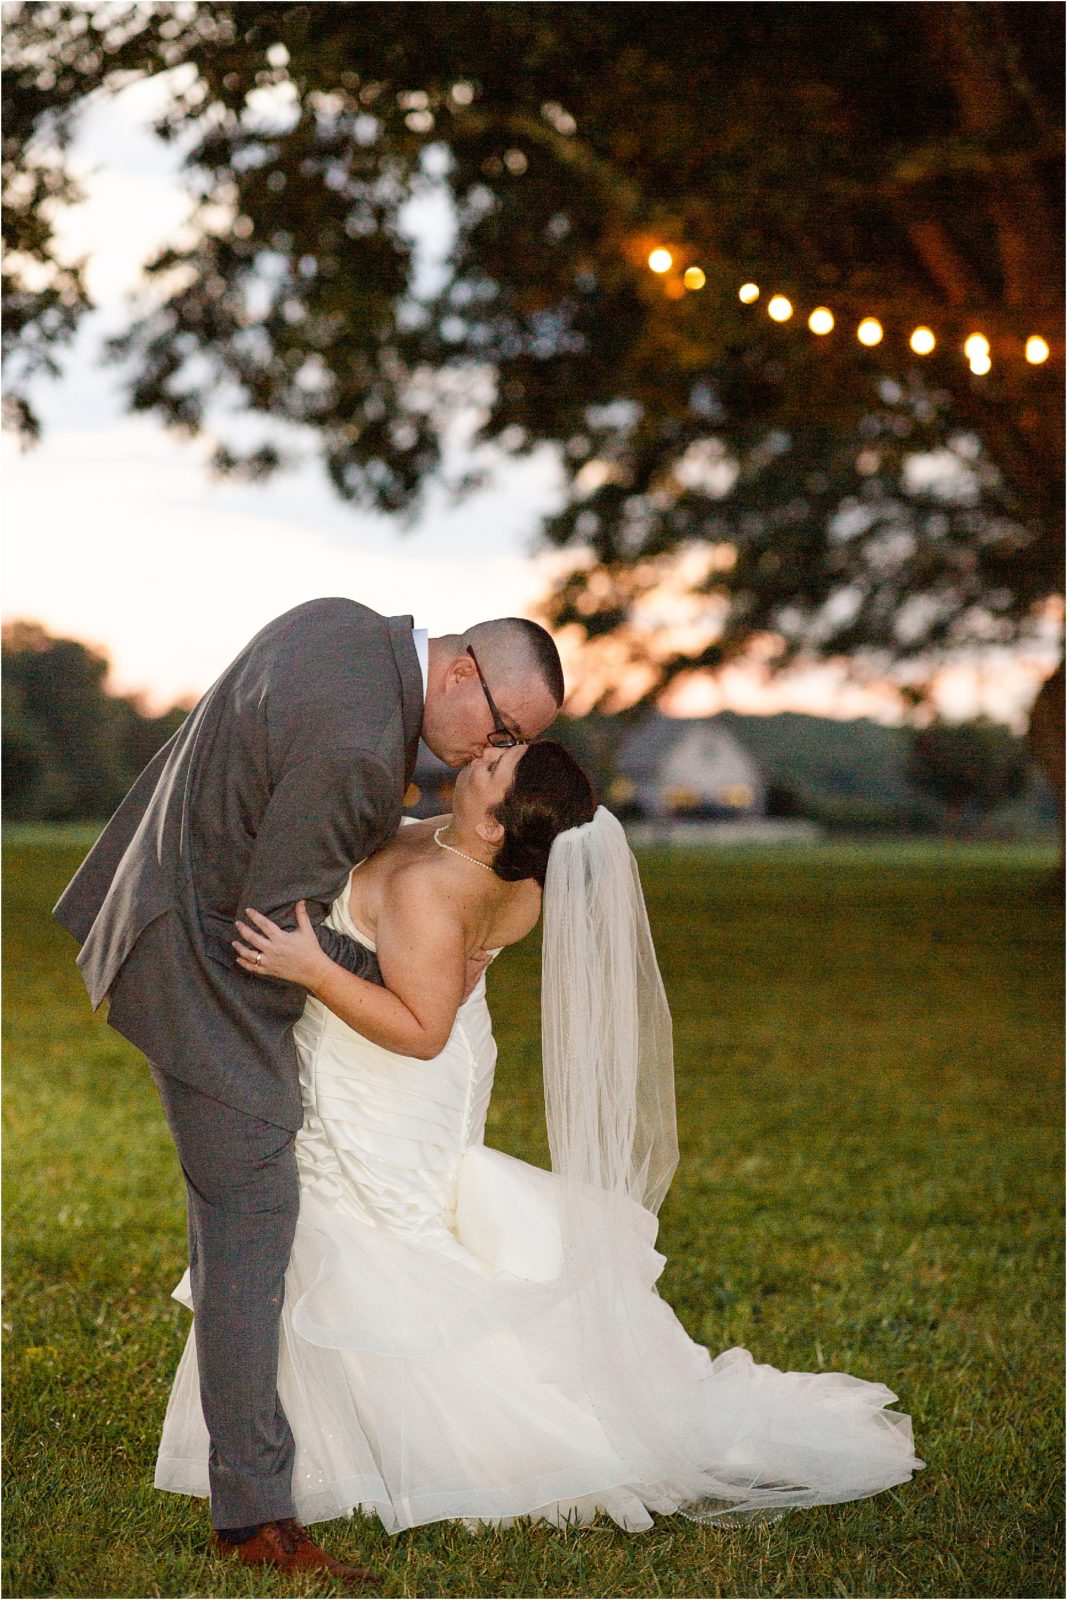 Man dips bride in wedding gown